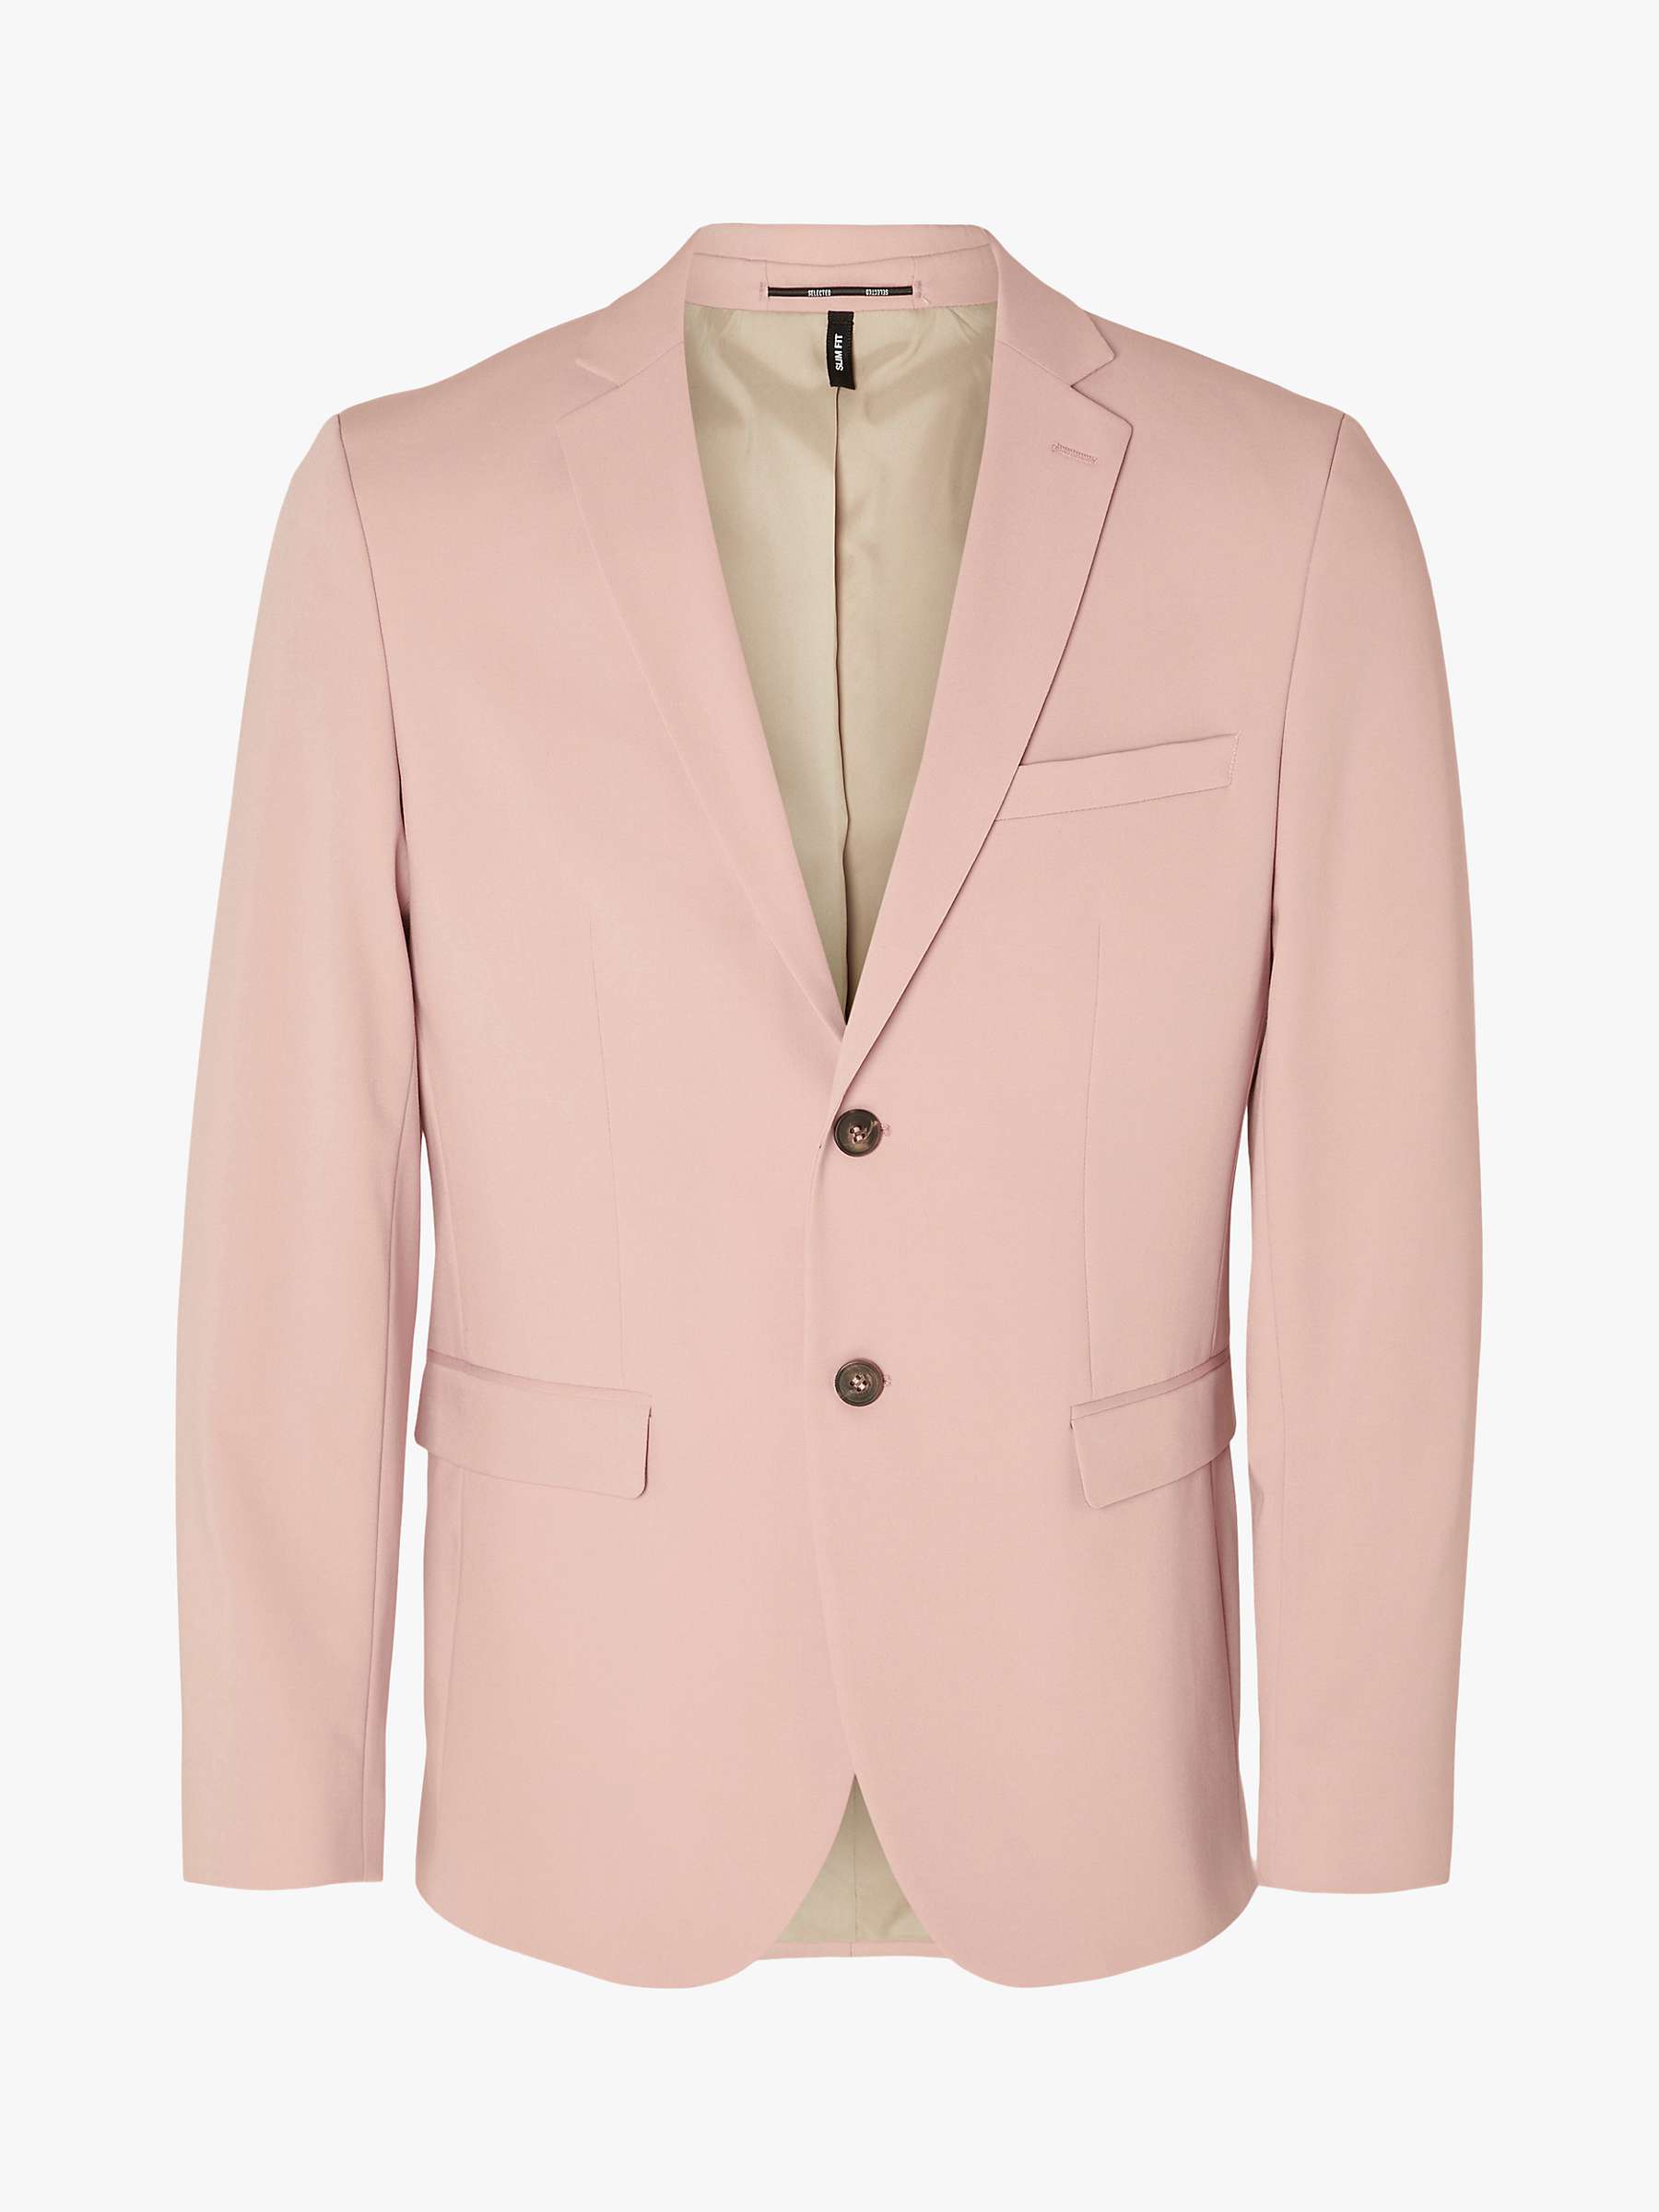 Buy SELECTED HOMME Slim Fit Suit Jacket, Pink Online at johnlewis.com